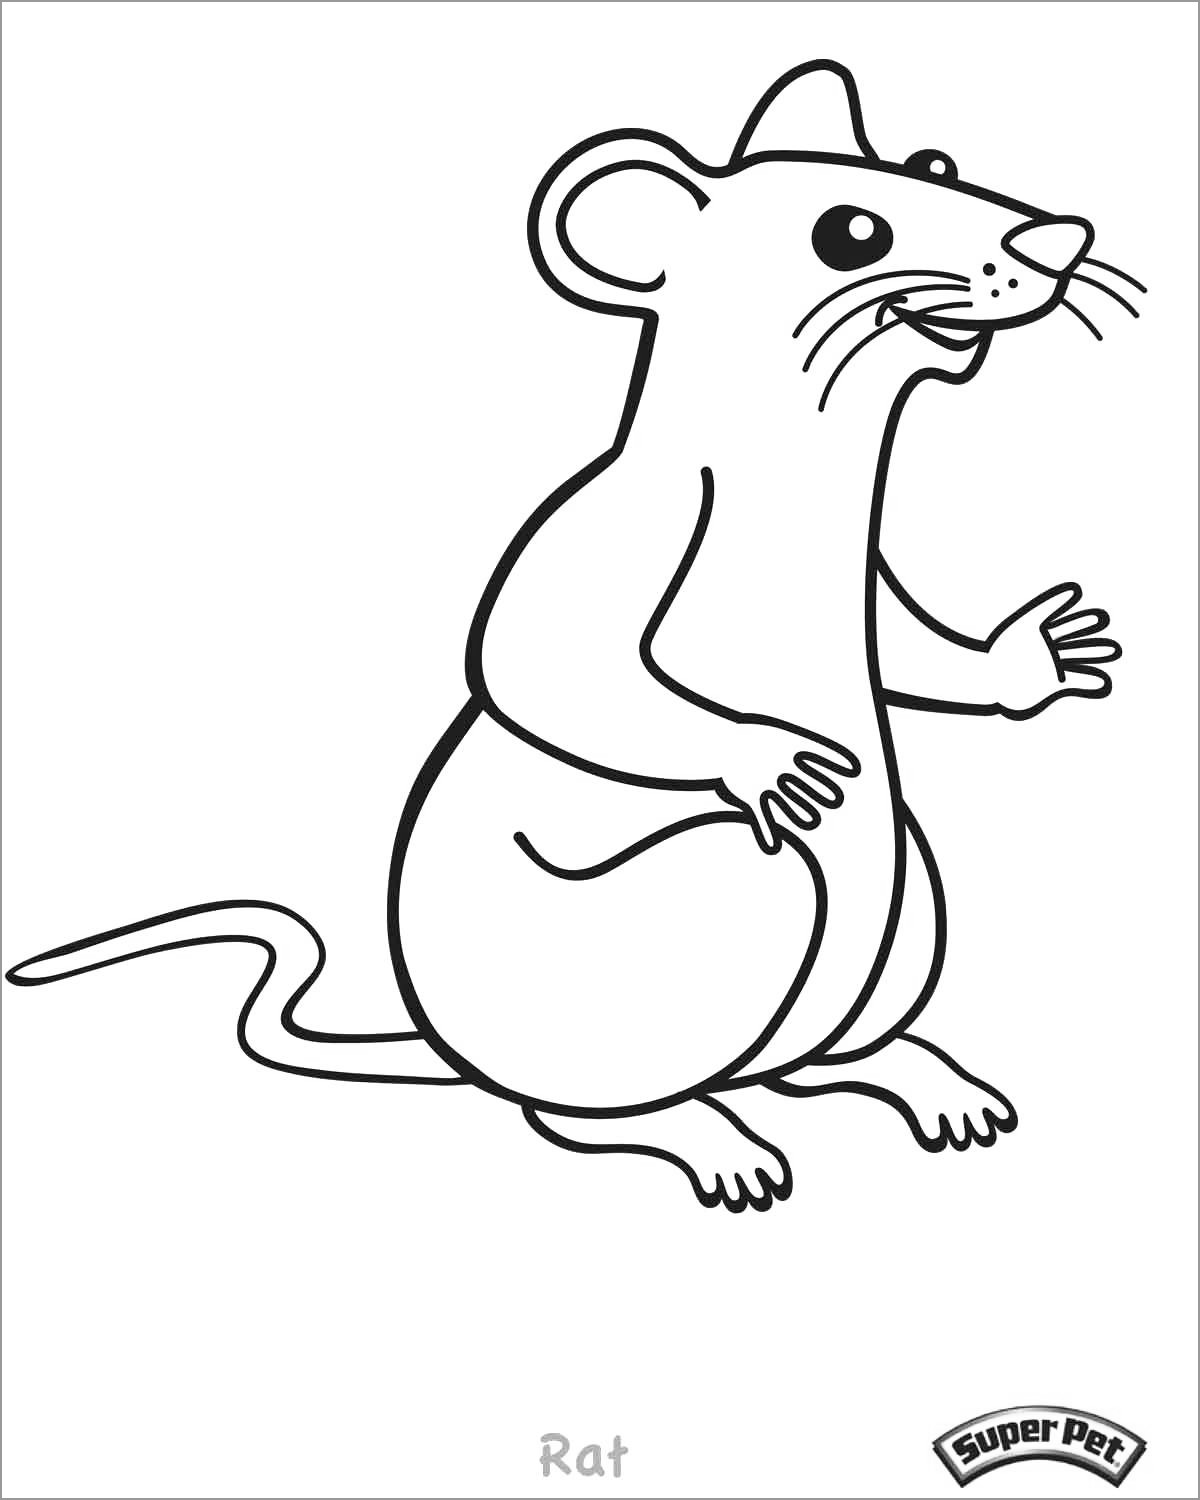 Cartoon Rat Coloring Page   ColoringBay